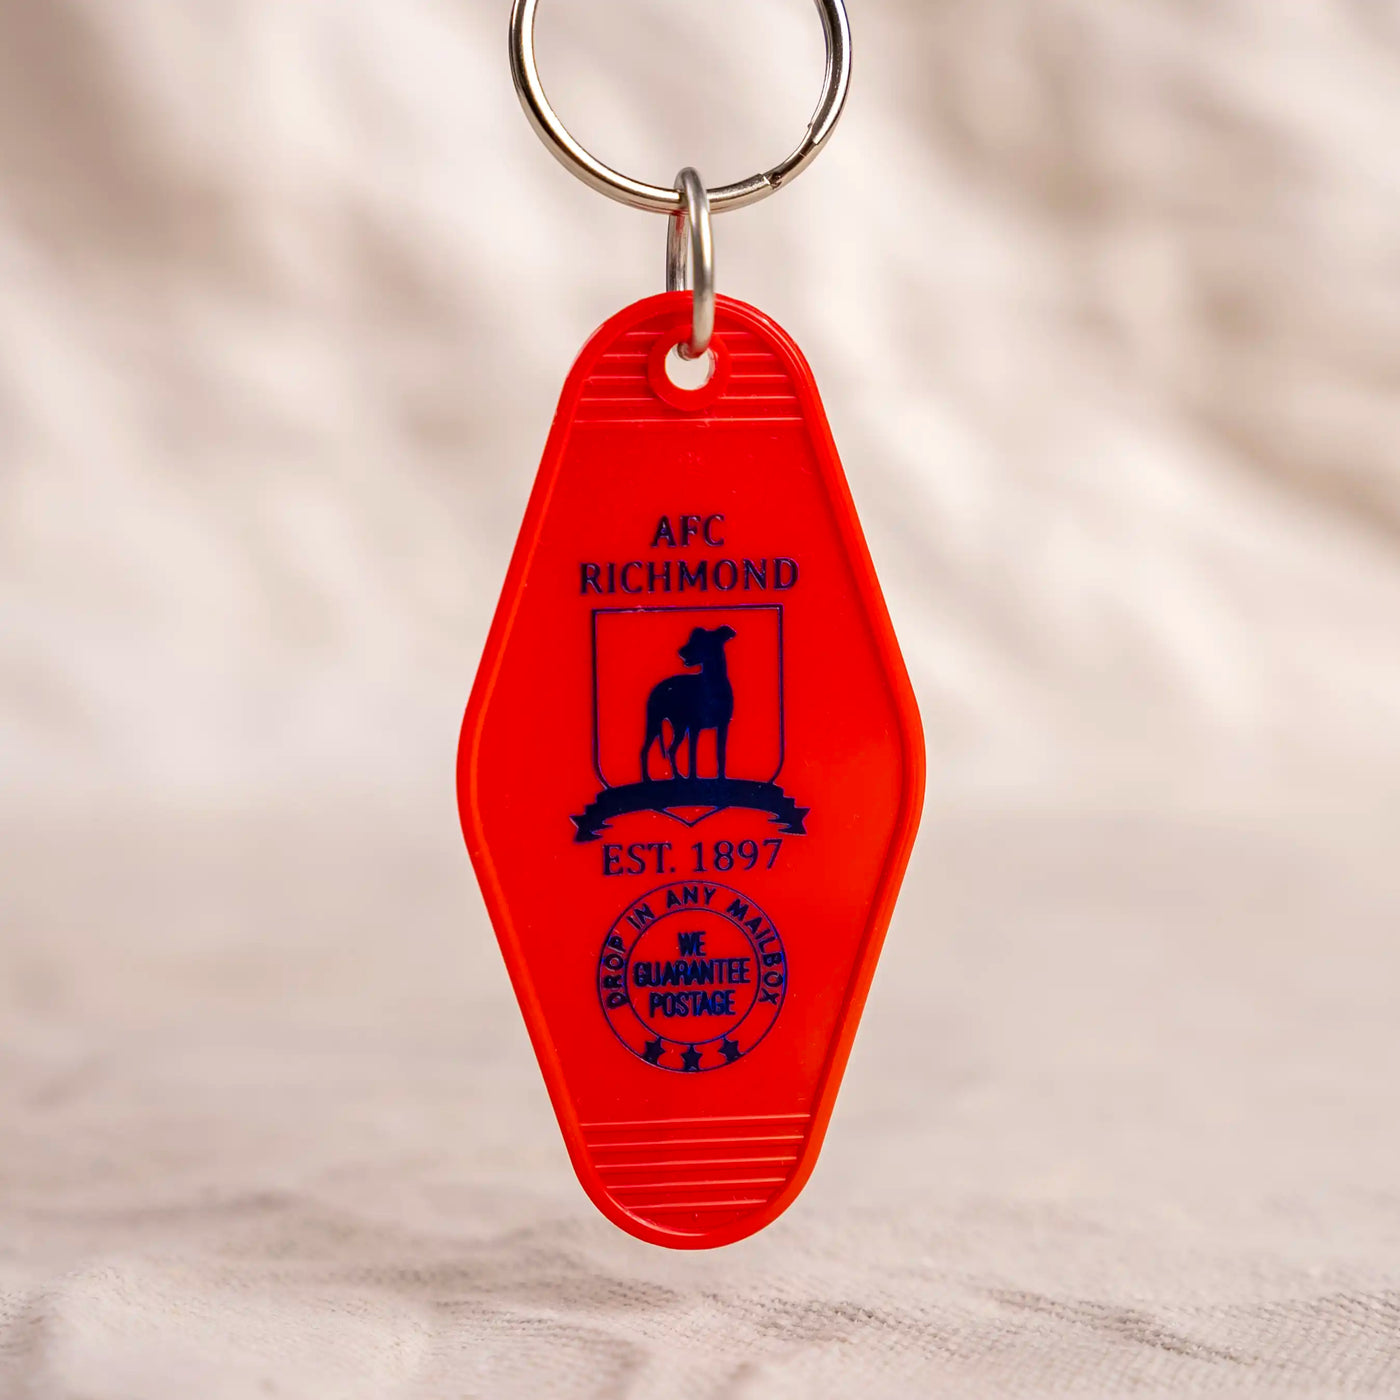 AFC Ricmond Motel Key Fob. Red key fob with navy logo.